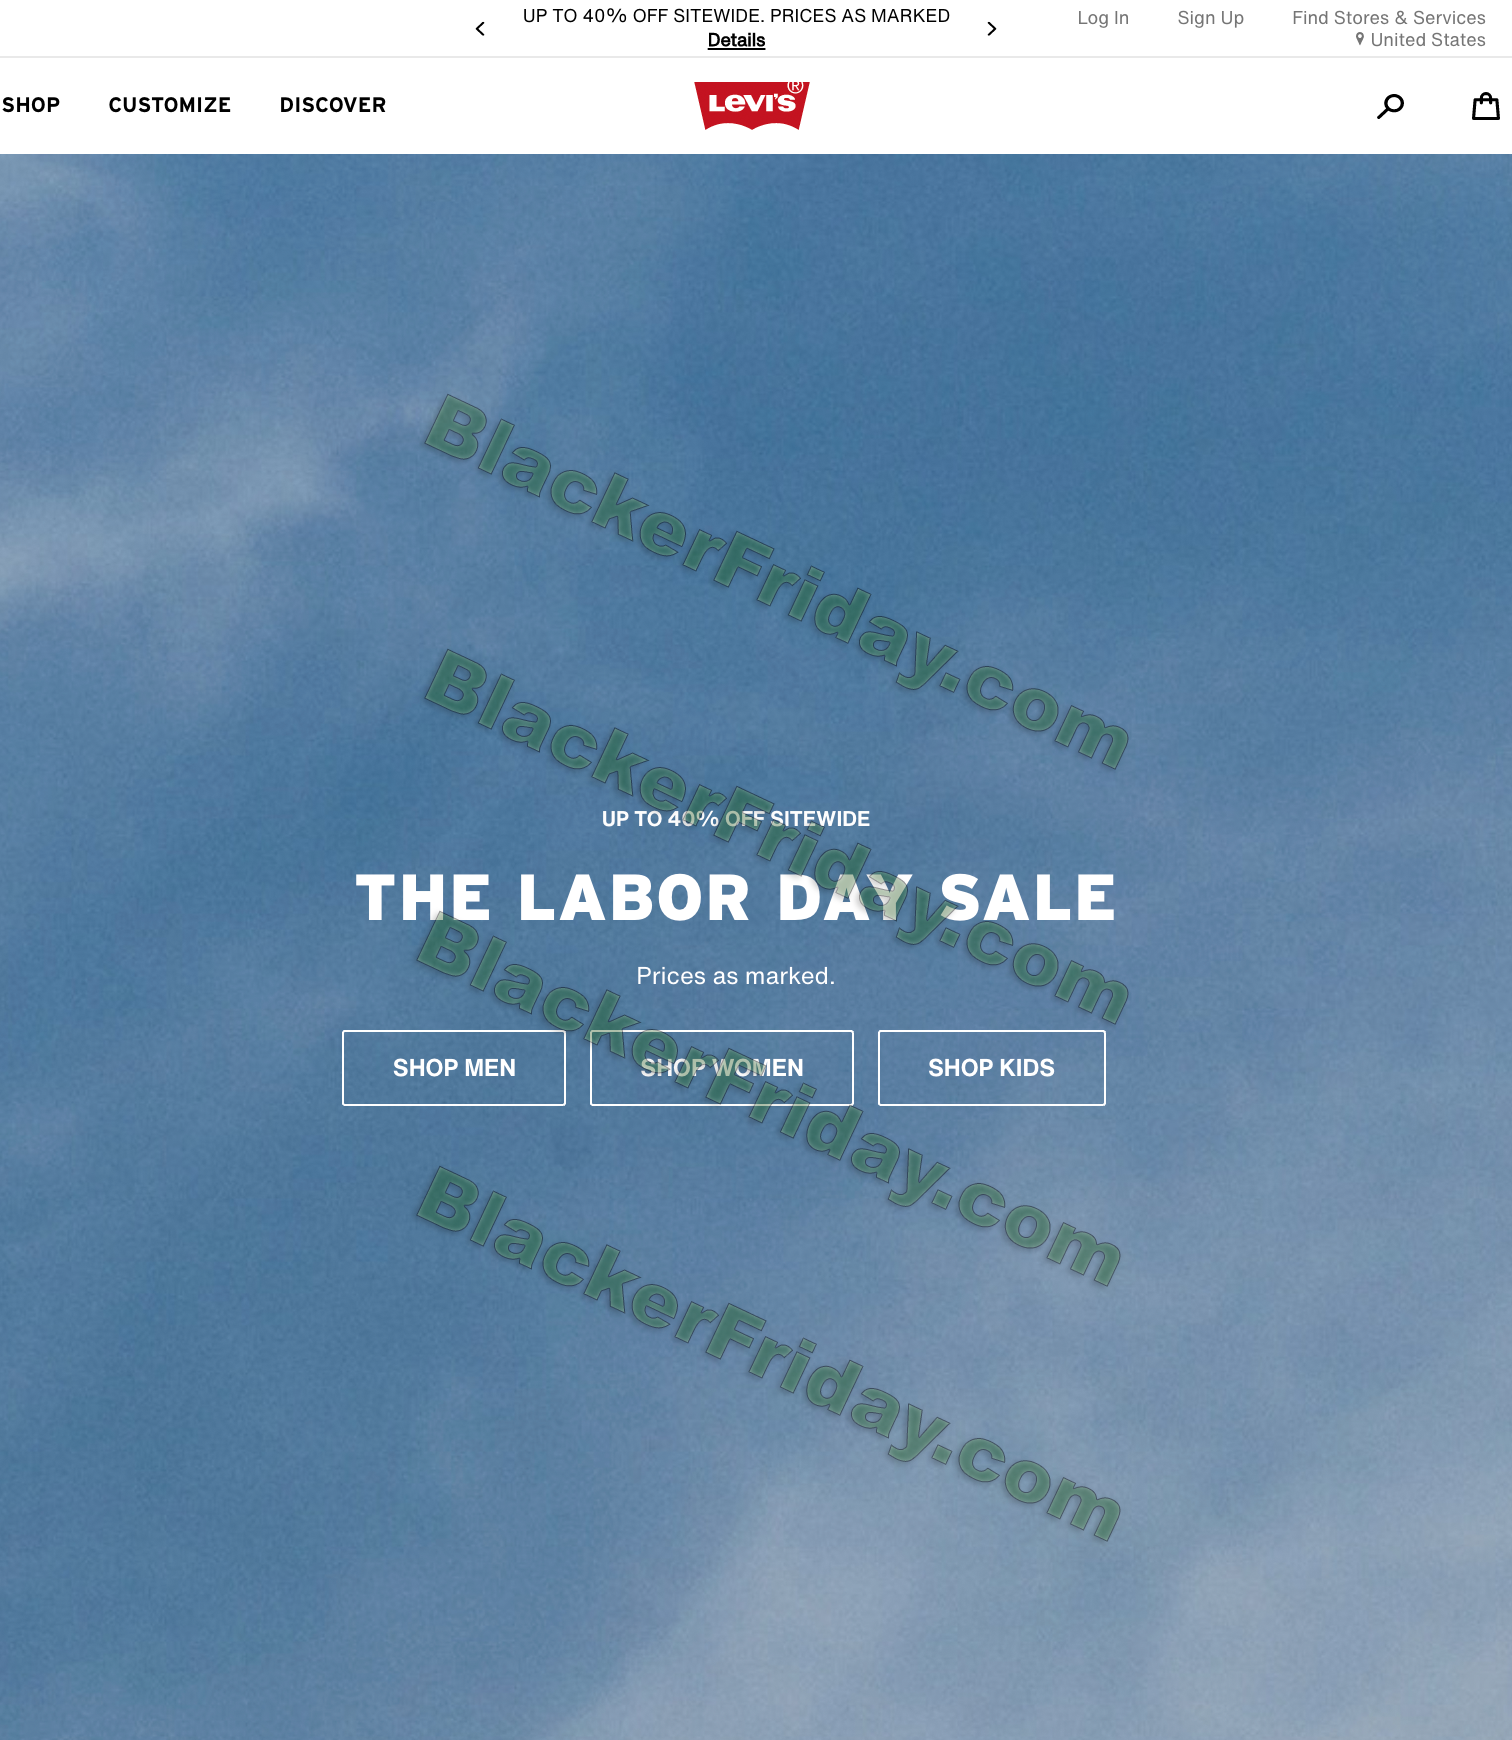 Levi's Labor Day Sale 2021 - Blacker Friday